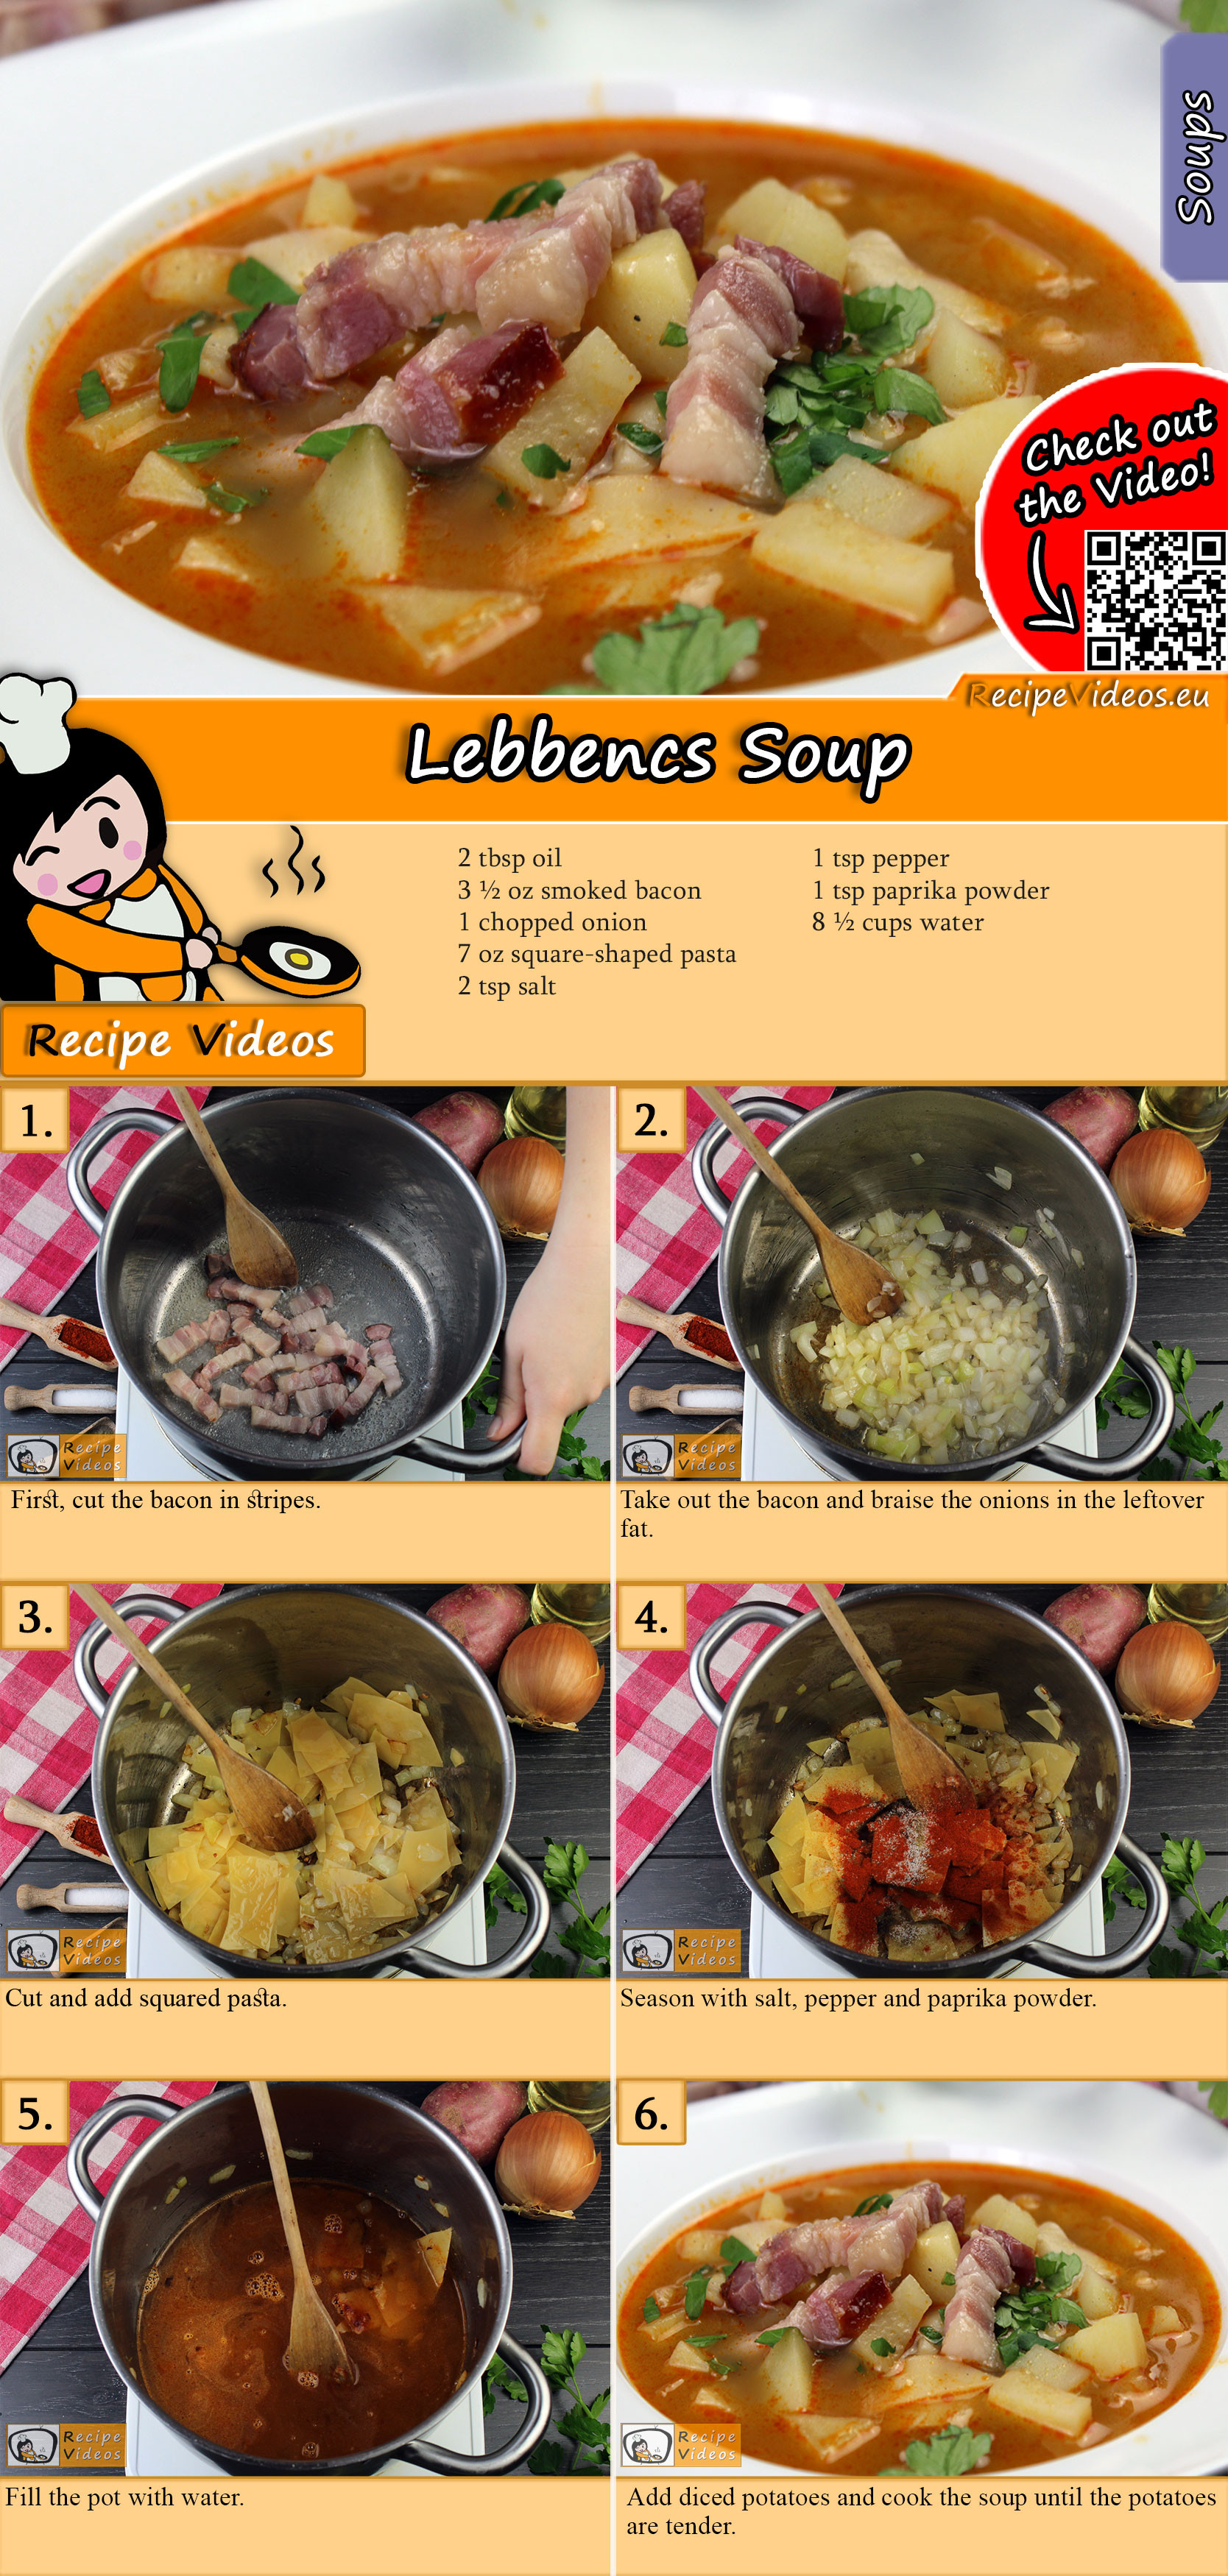 Lebbencs Soup recipe with video